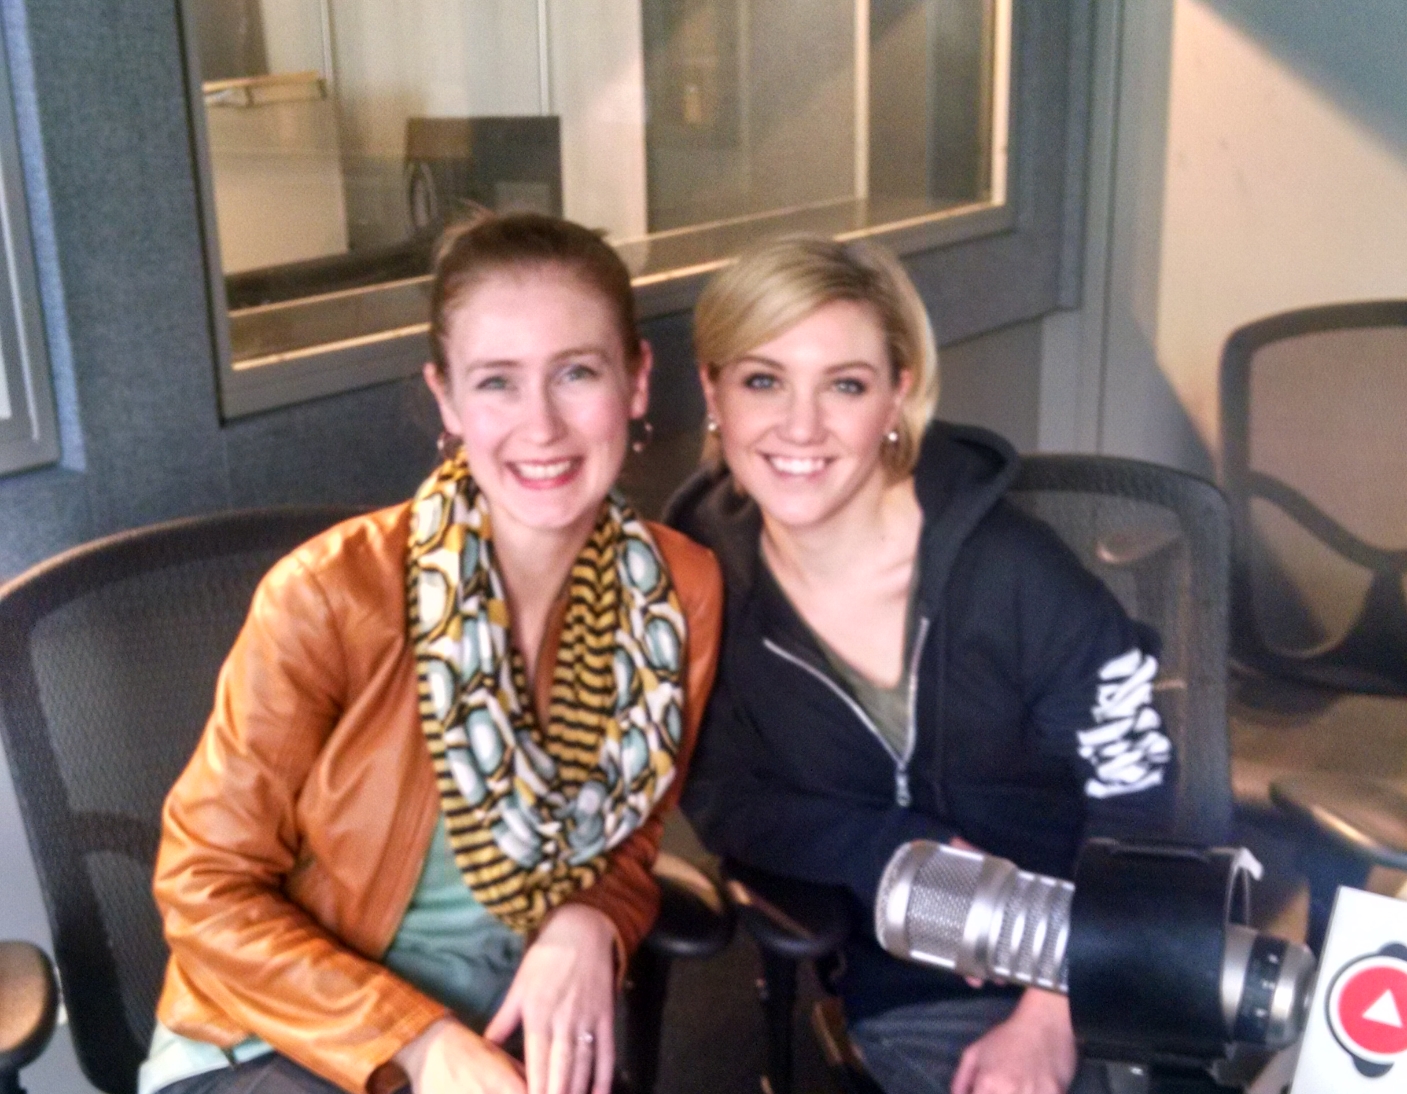 On WGN Radio with former RedEye nightlife reporter Kate Bernot